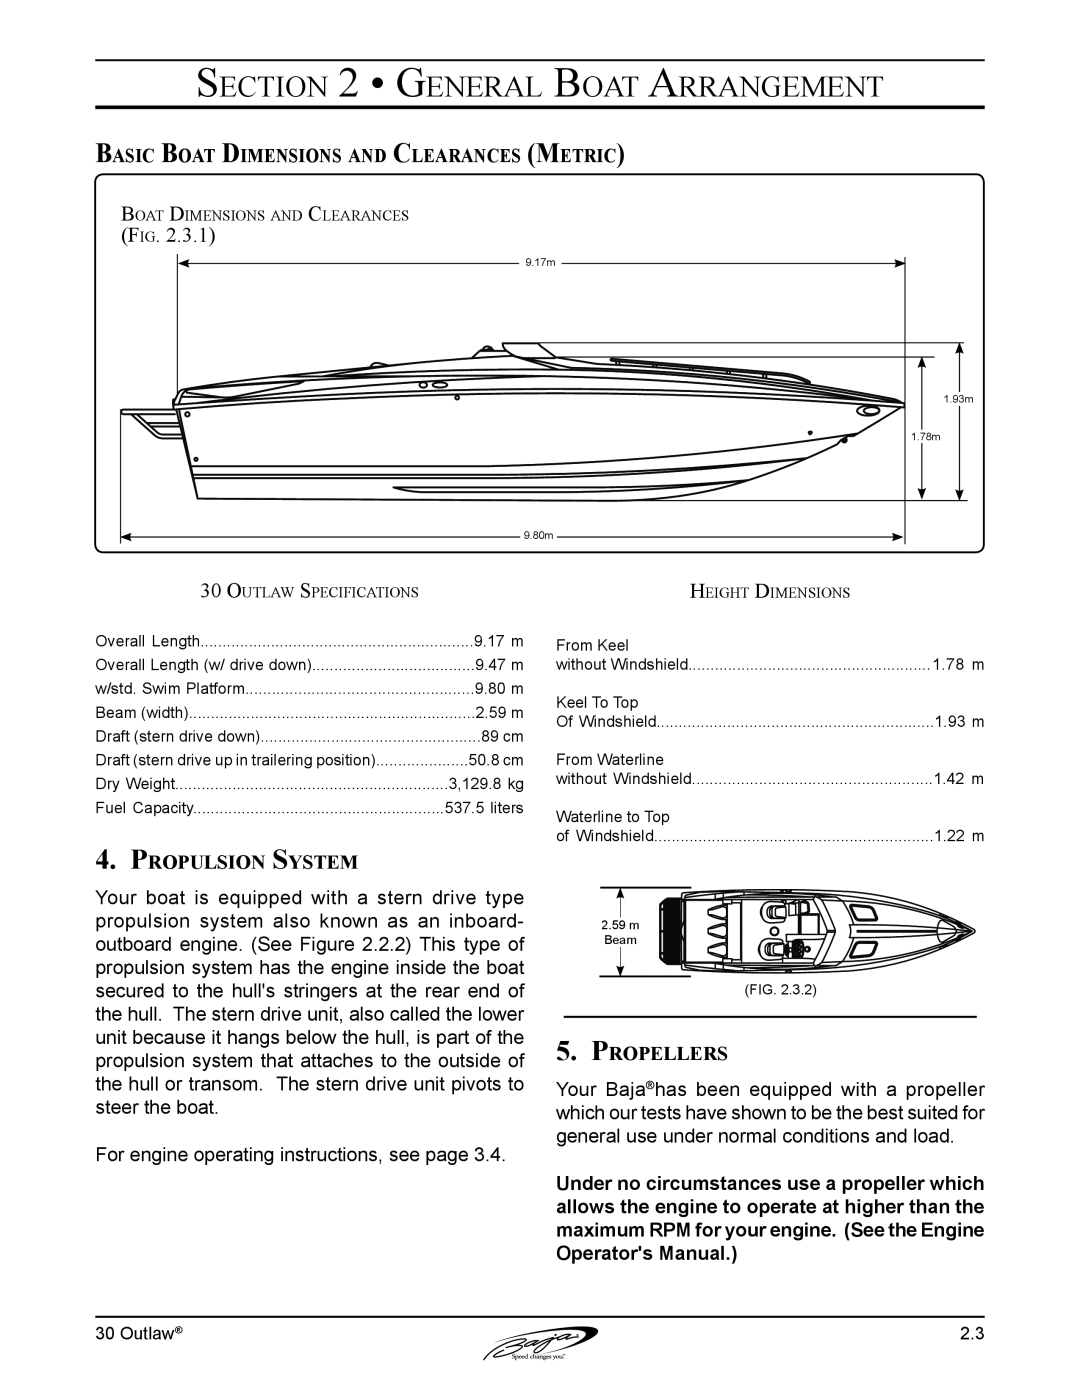 Baja Marine 30 manual General Boat Arrangement, Basic Boat Dimensions and Clearances Metric, Propulsion System, Propellers 